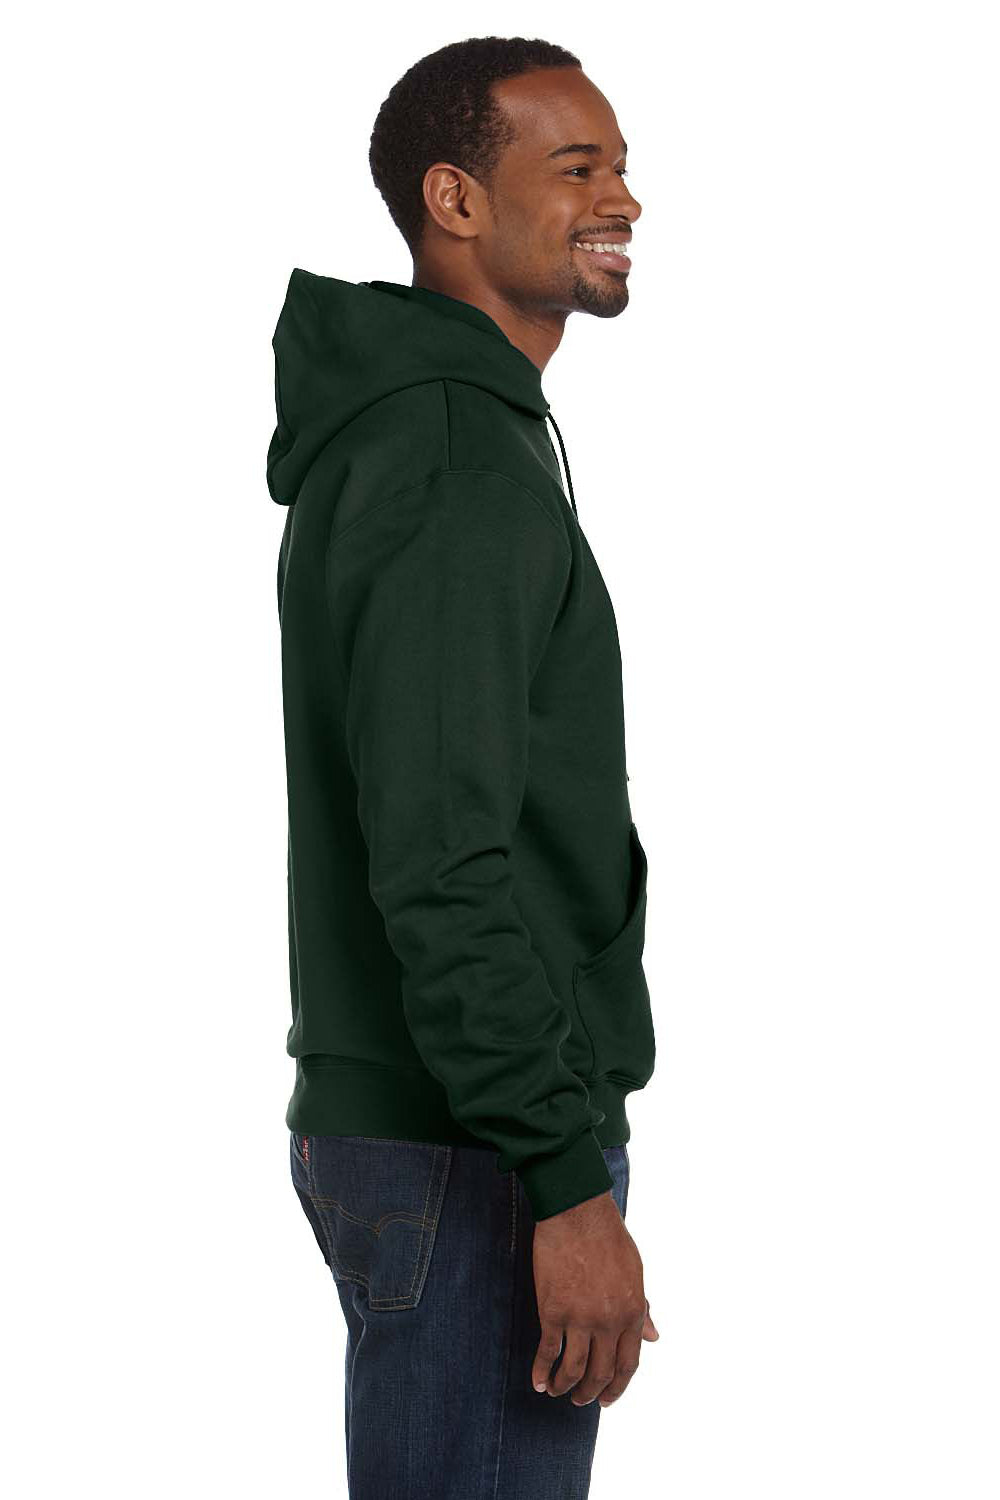 S700 Mens Double Dry Eco Moisture Wicking Fleece Hooded Sweatshirt Hoodie — BigTopShirtShop.com